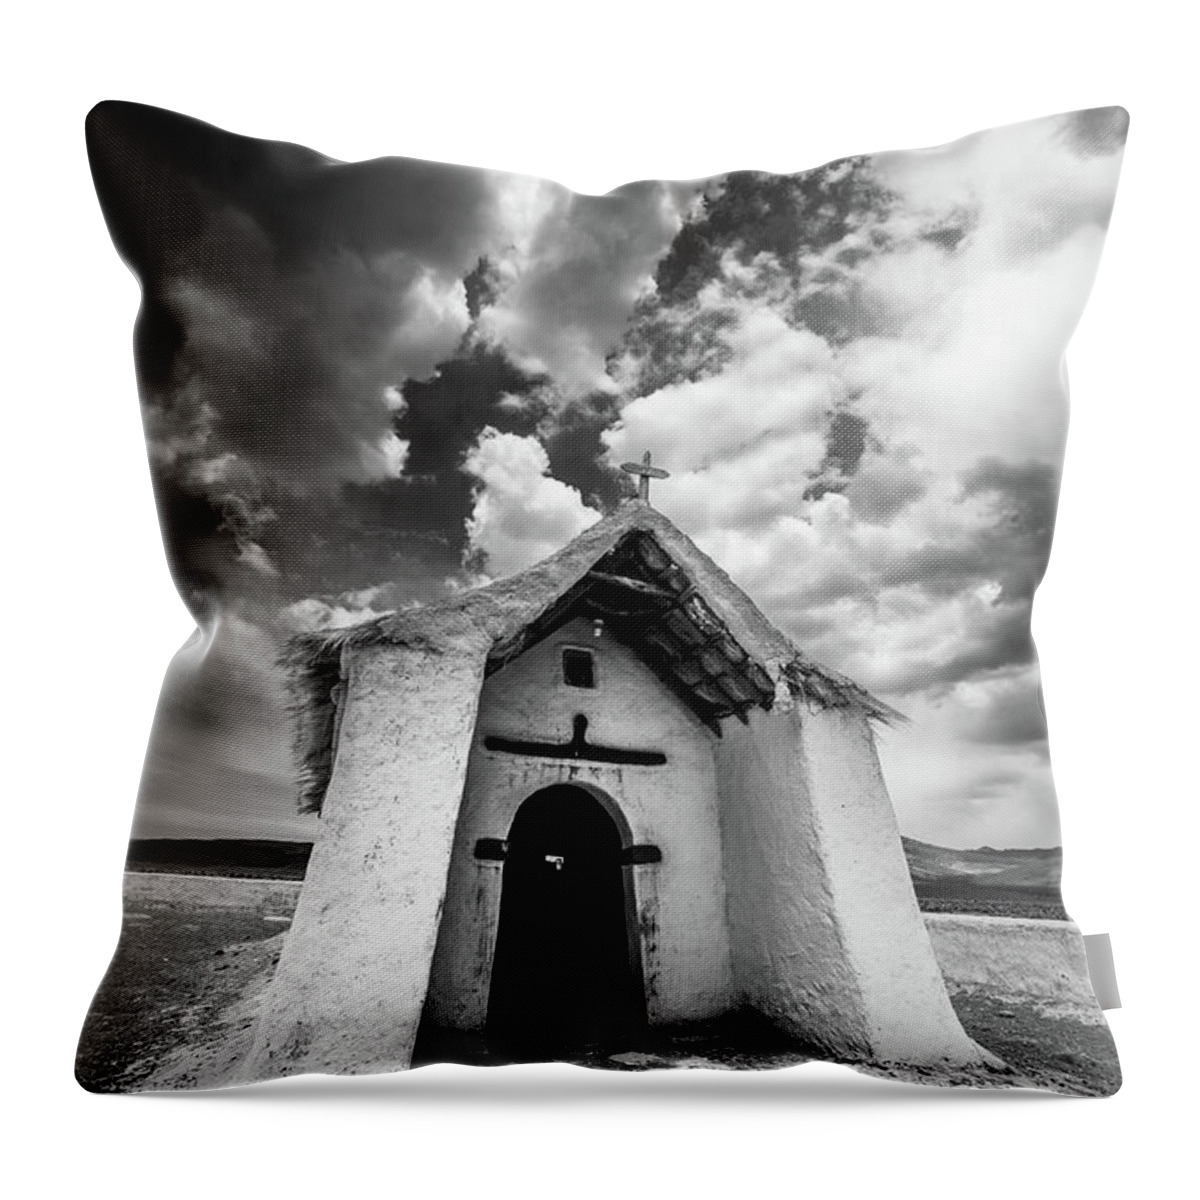 Isluga Throw Pillow featuring the photograph Isluga church #1 by Olivier Steiner